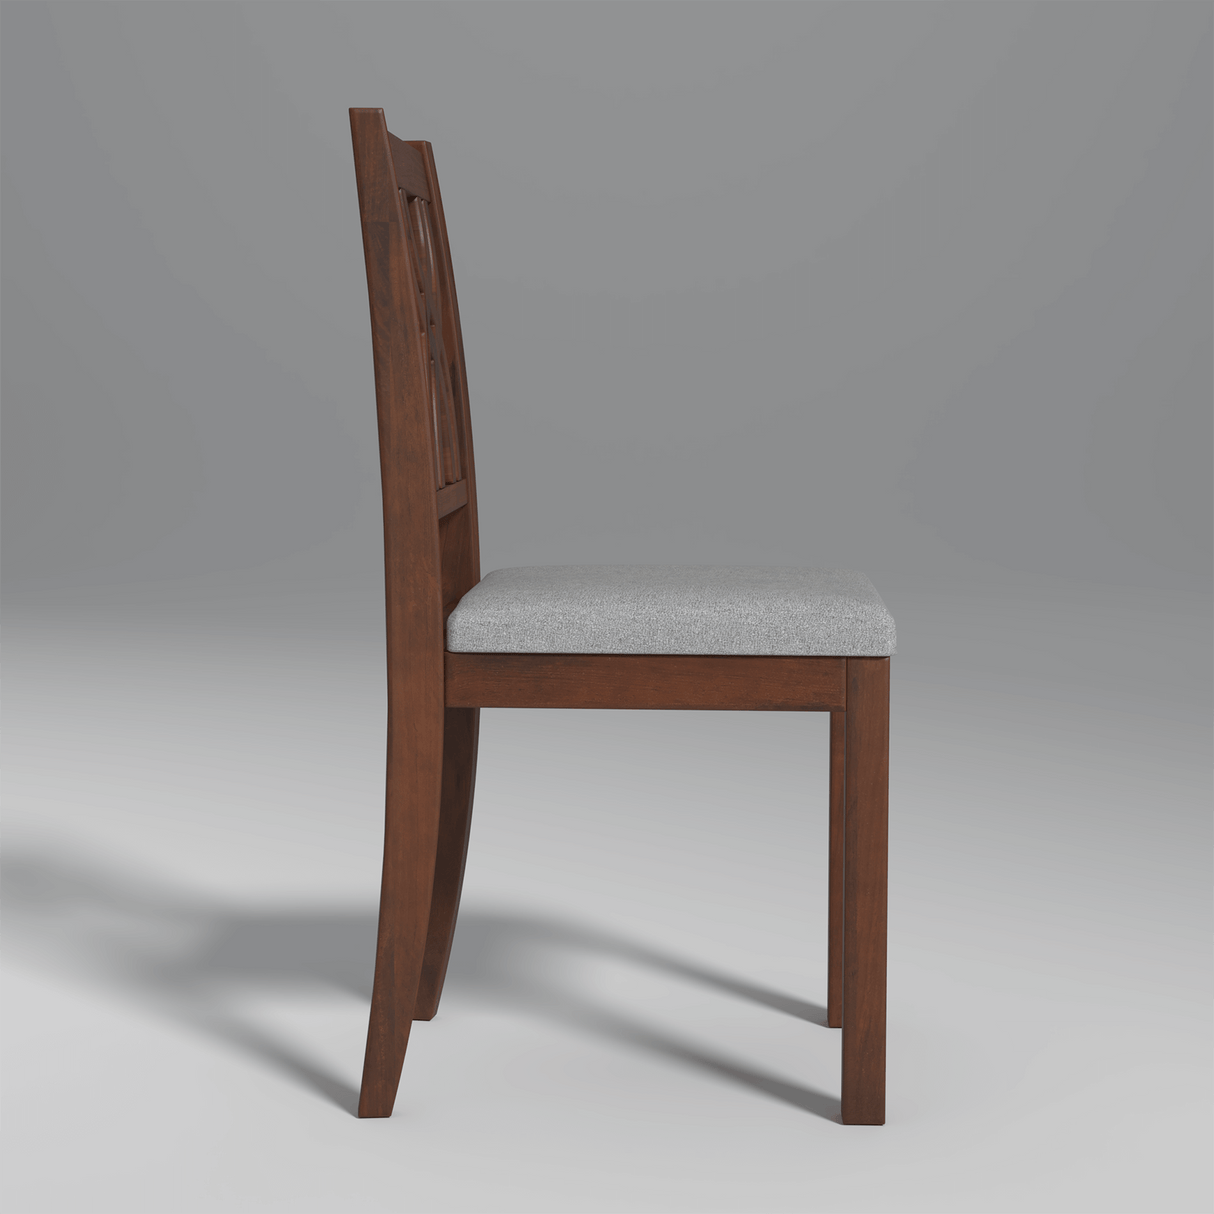 Oliver Mango Wood Chair In Walnut Finish